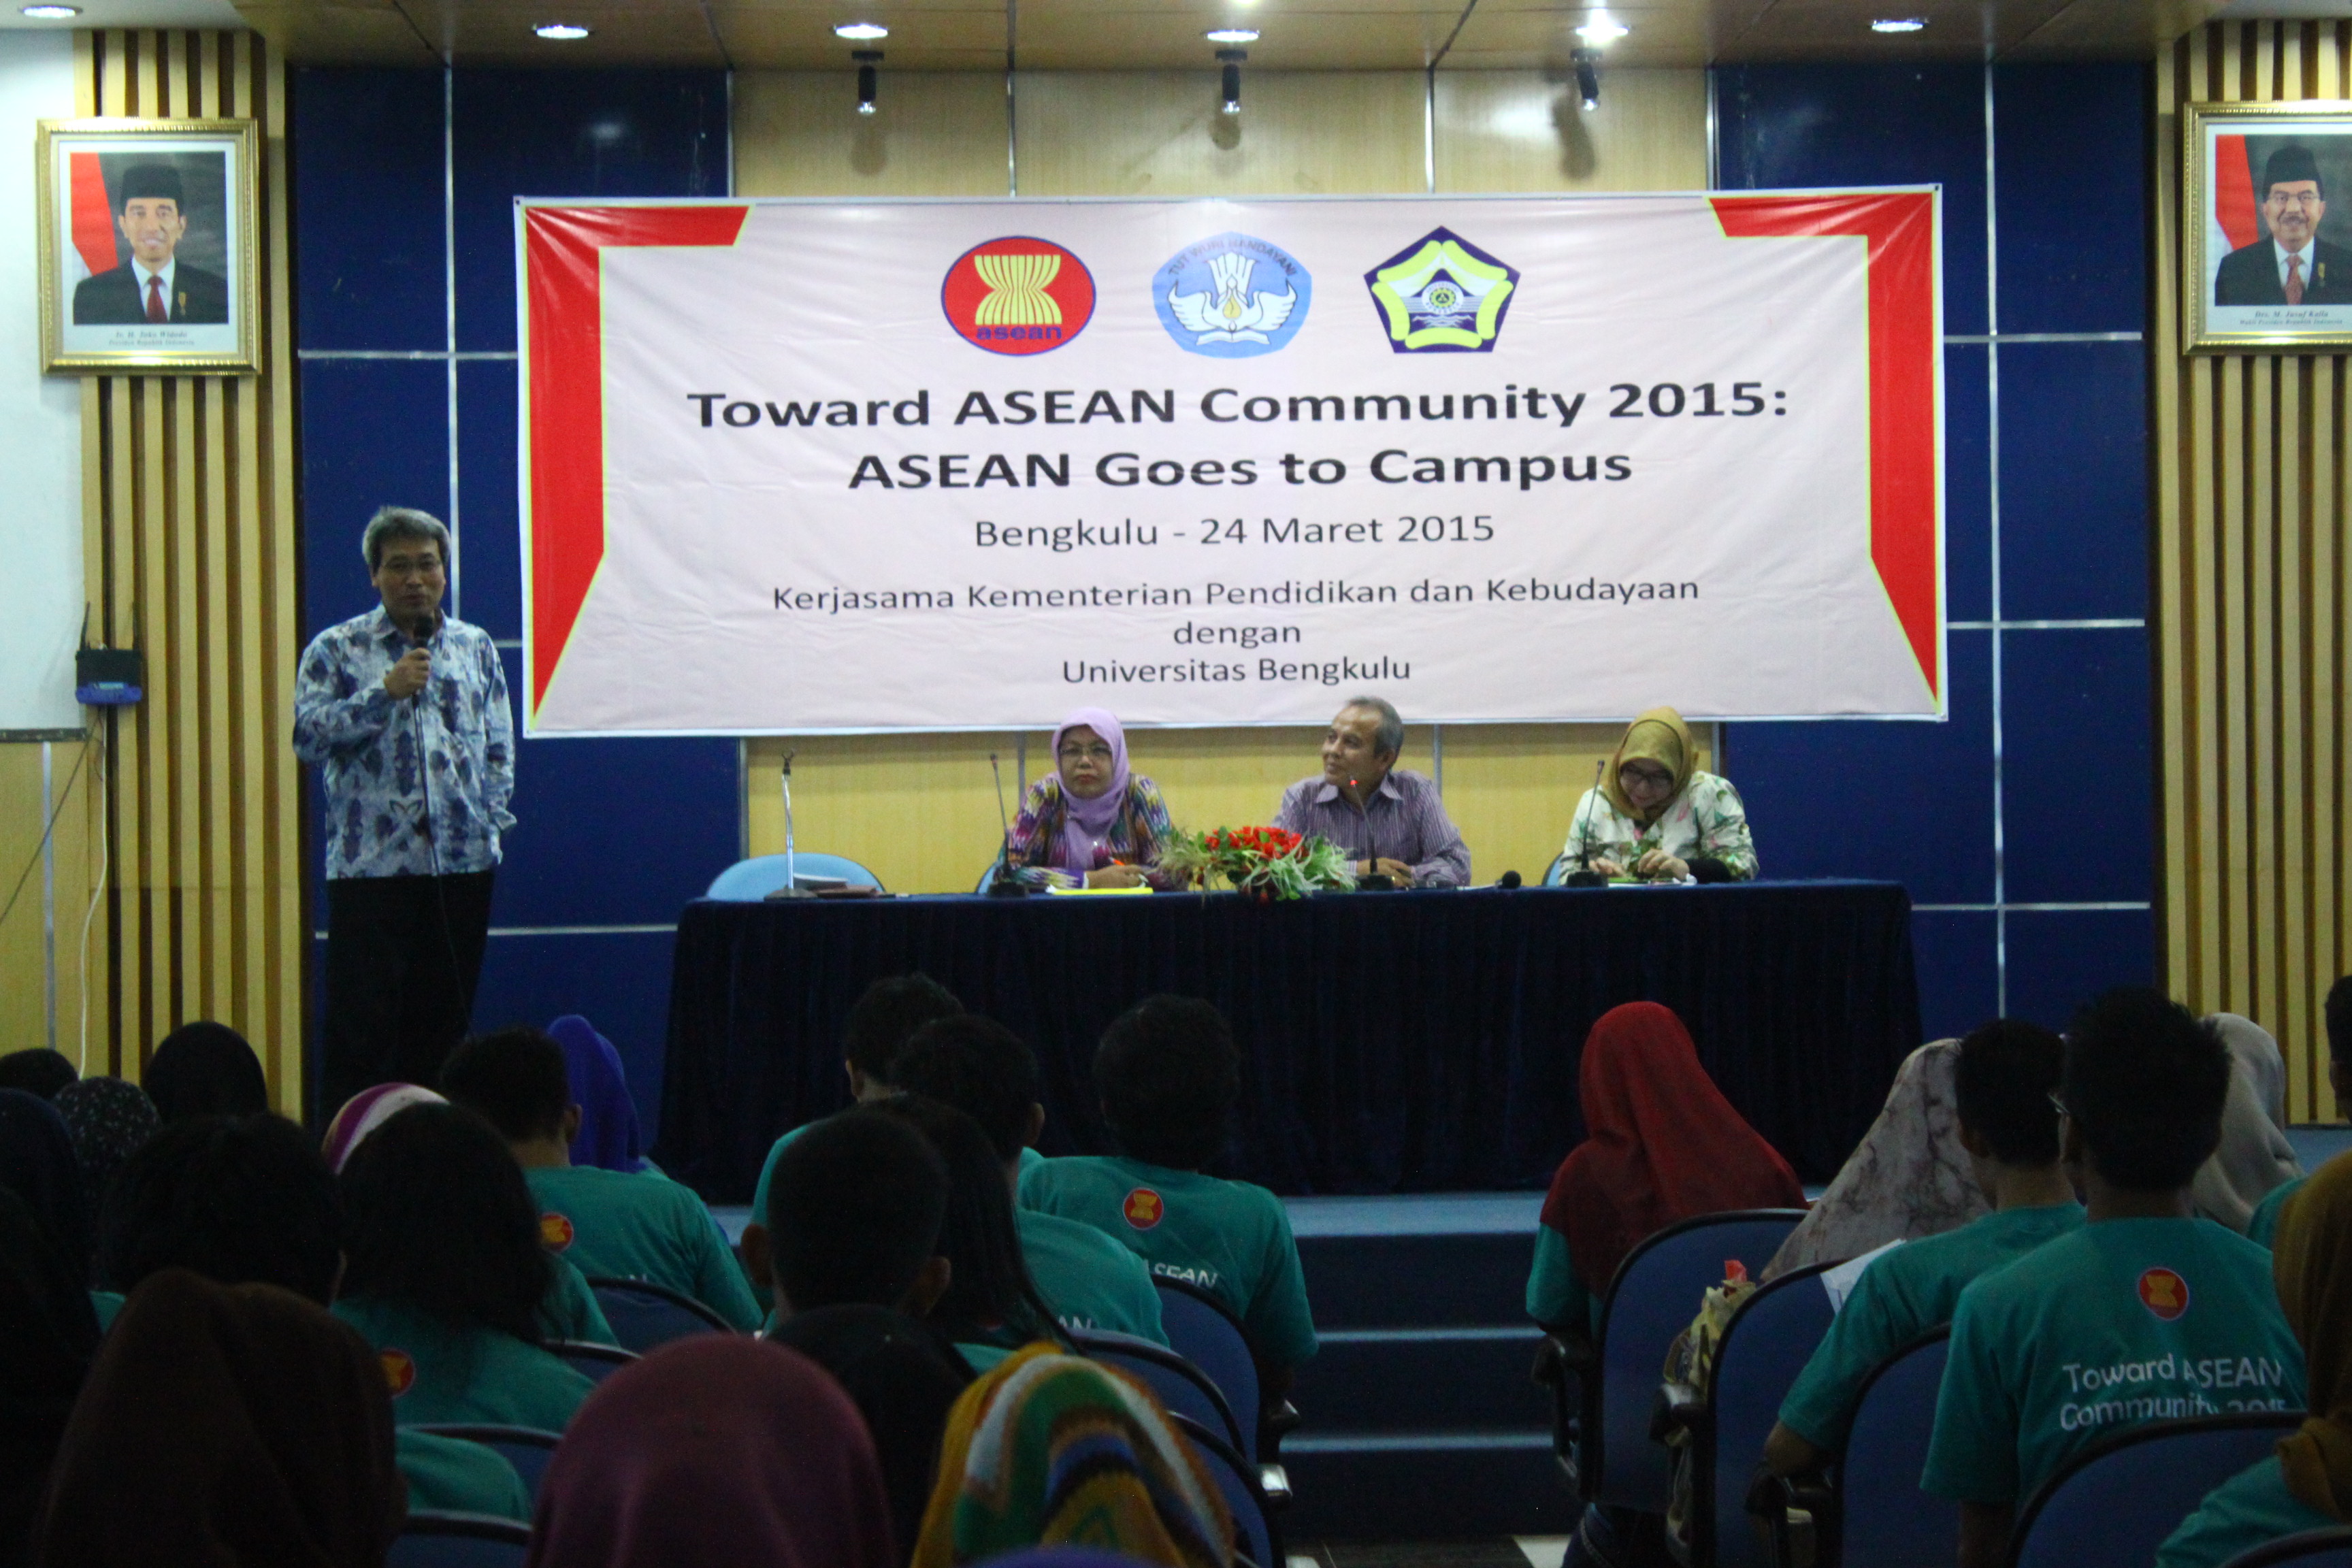 Sosialisasi Toward ASEAN Community 2015